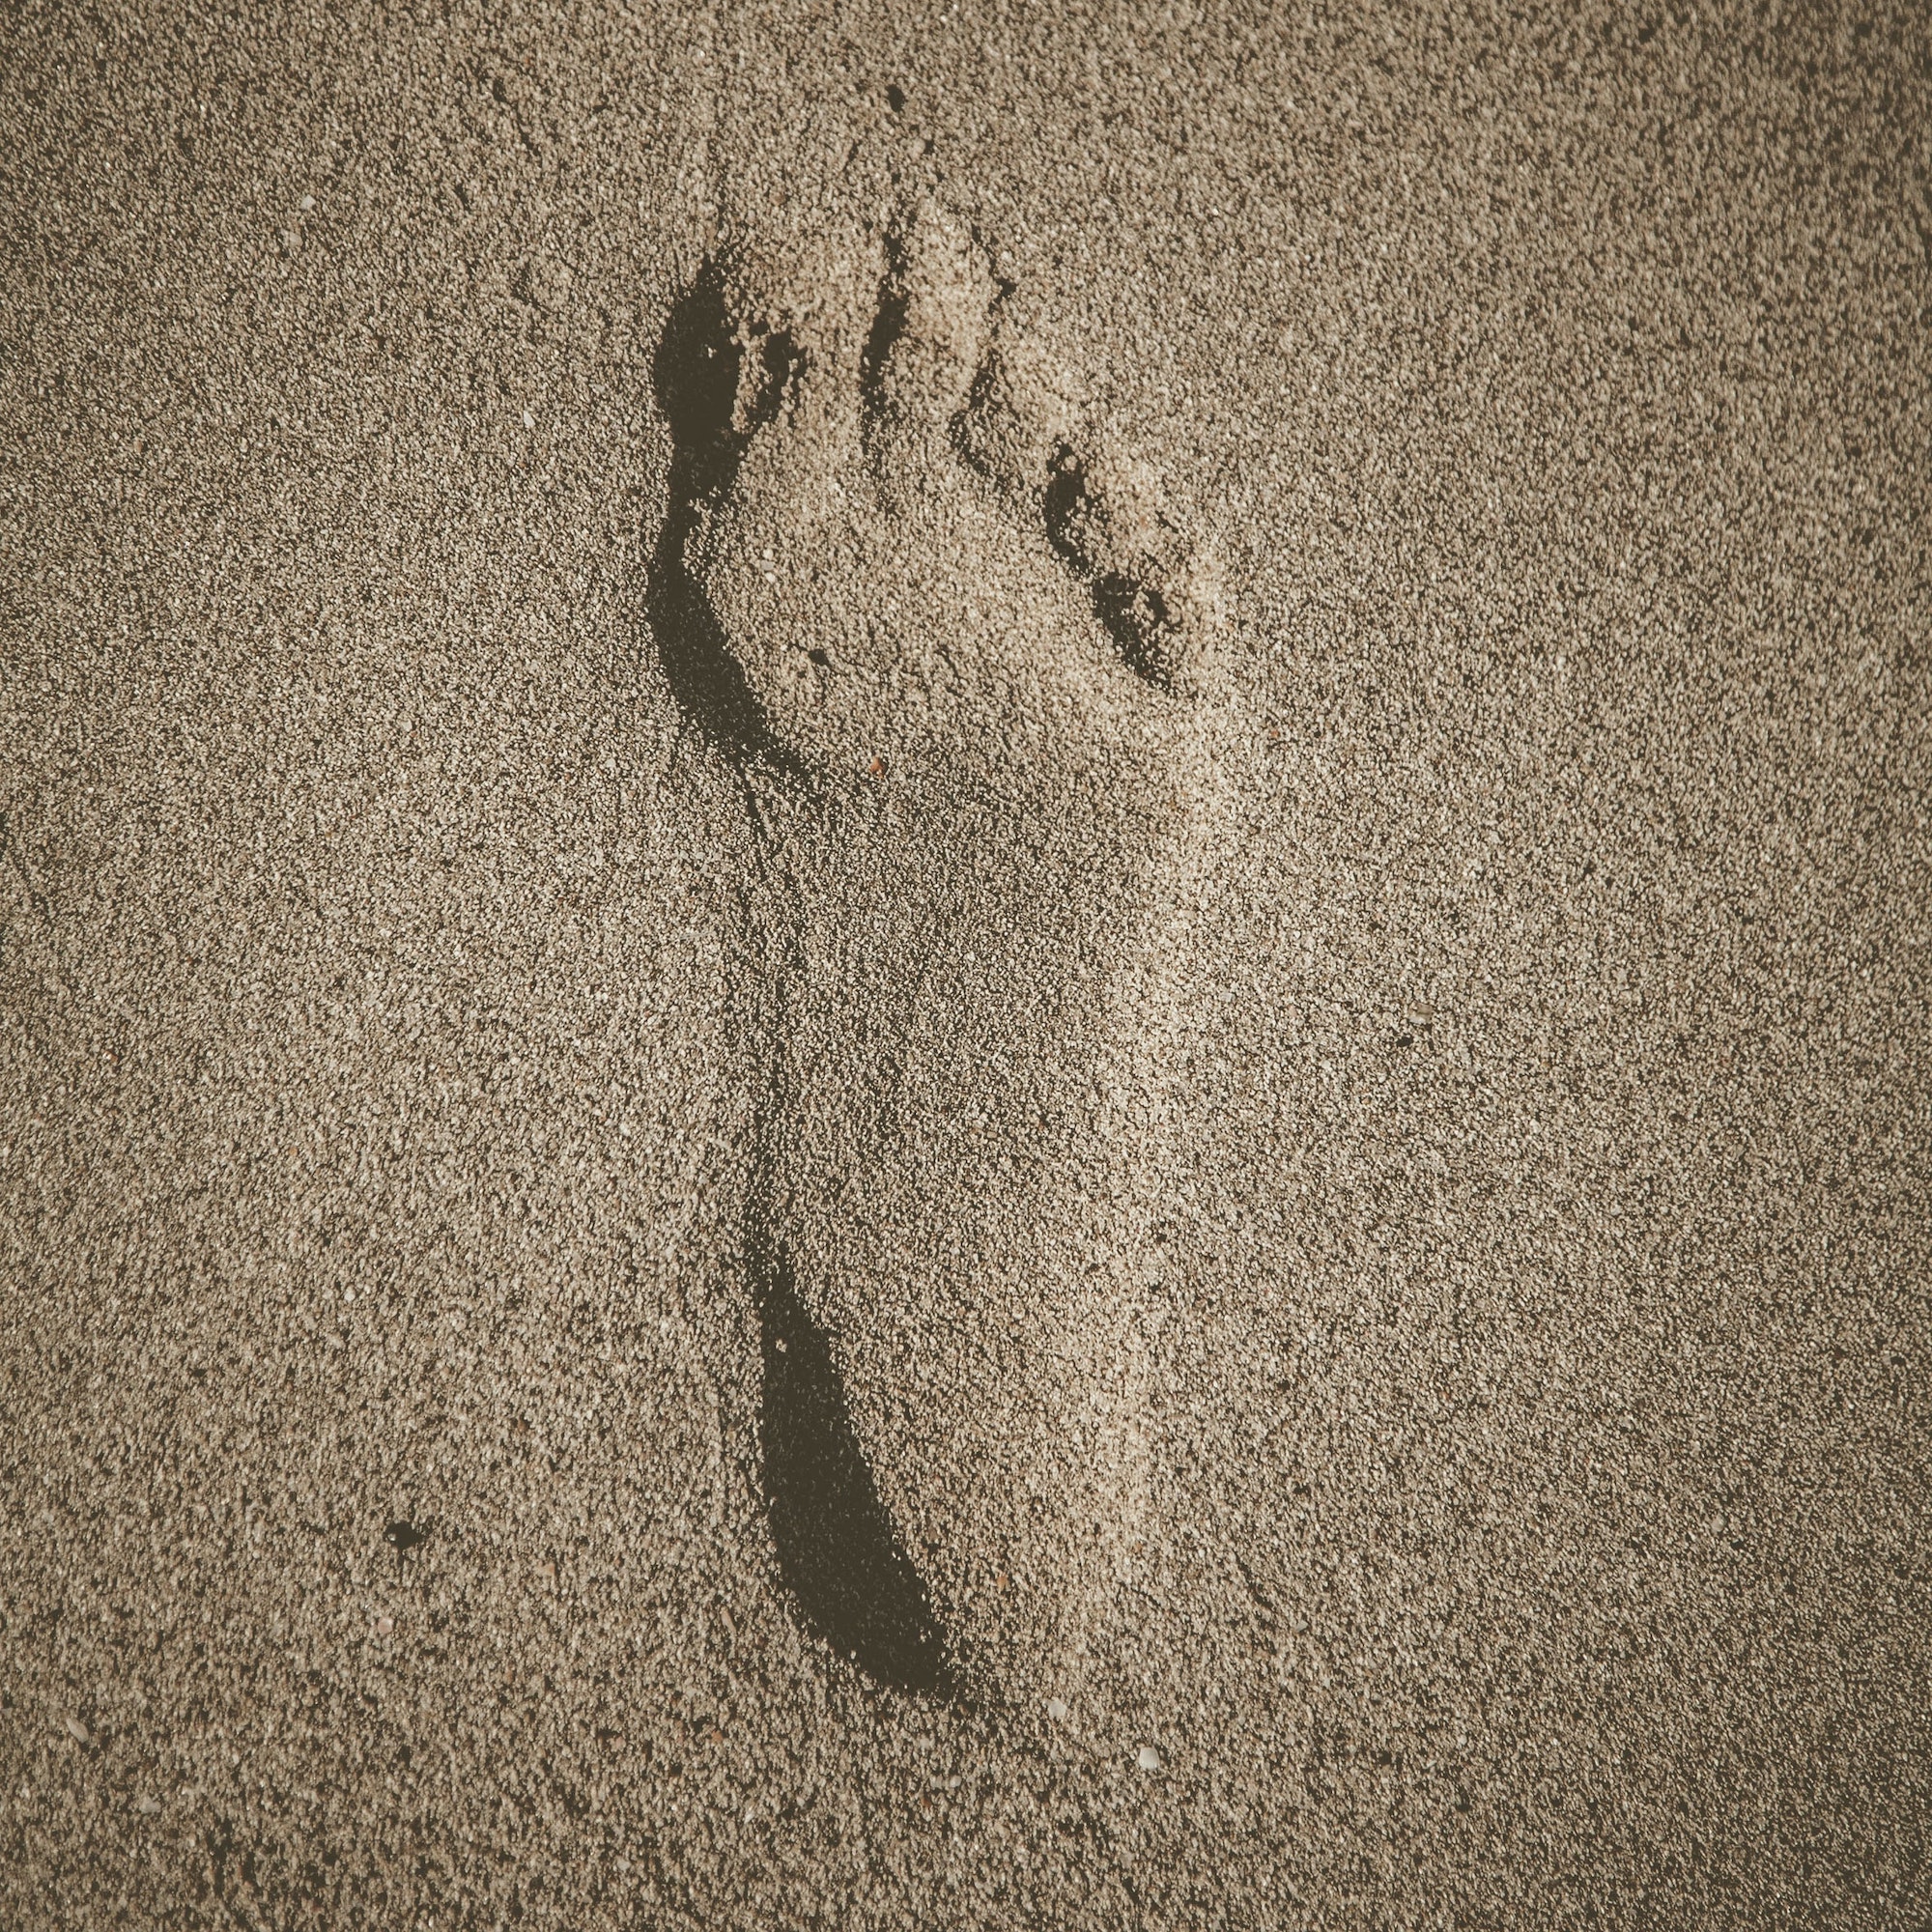 Photo of footprint in sand - Credit: Wolfgang Rottman via unsplash.com